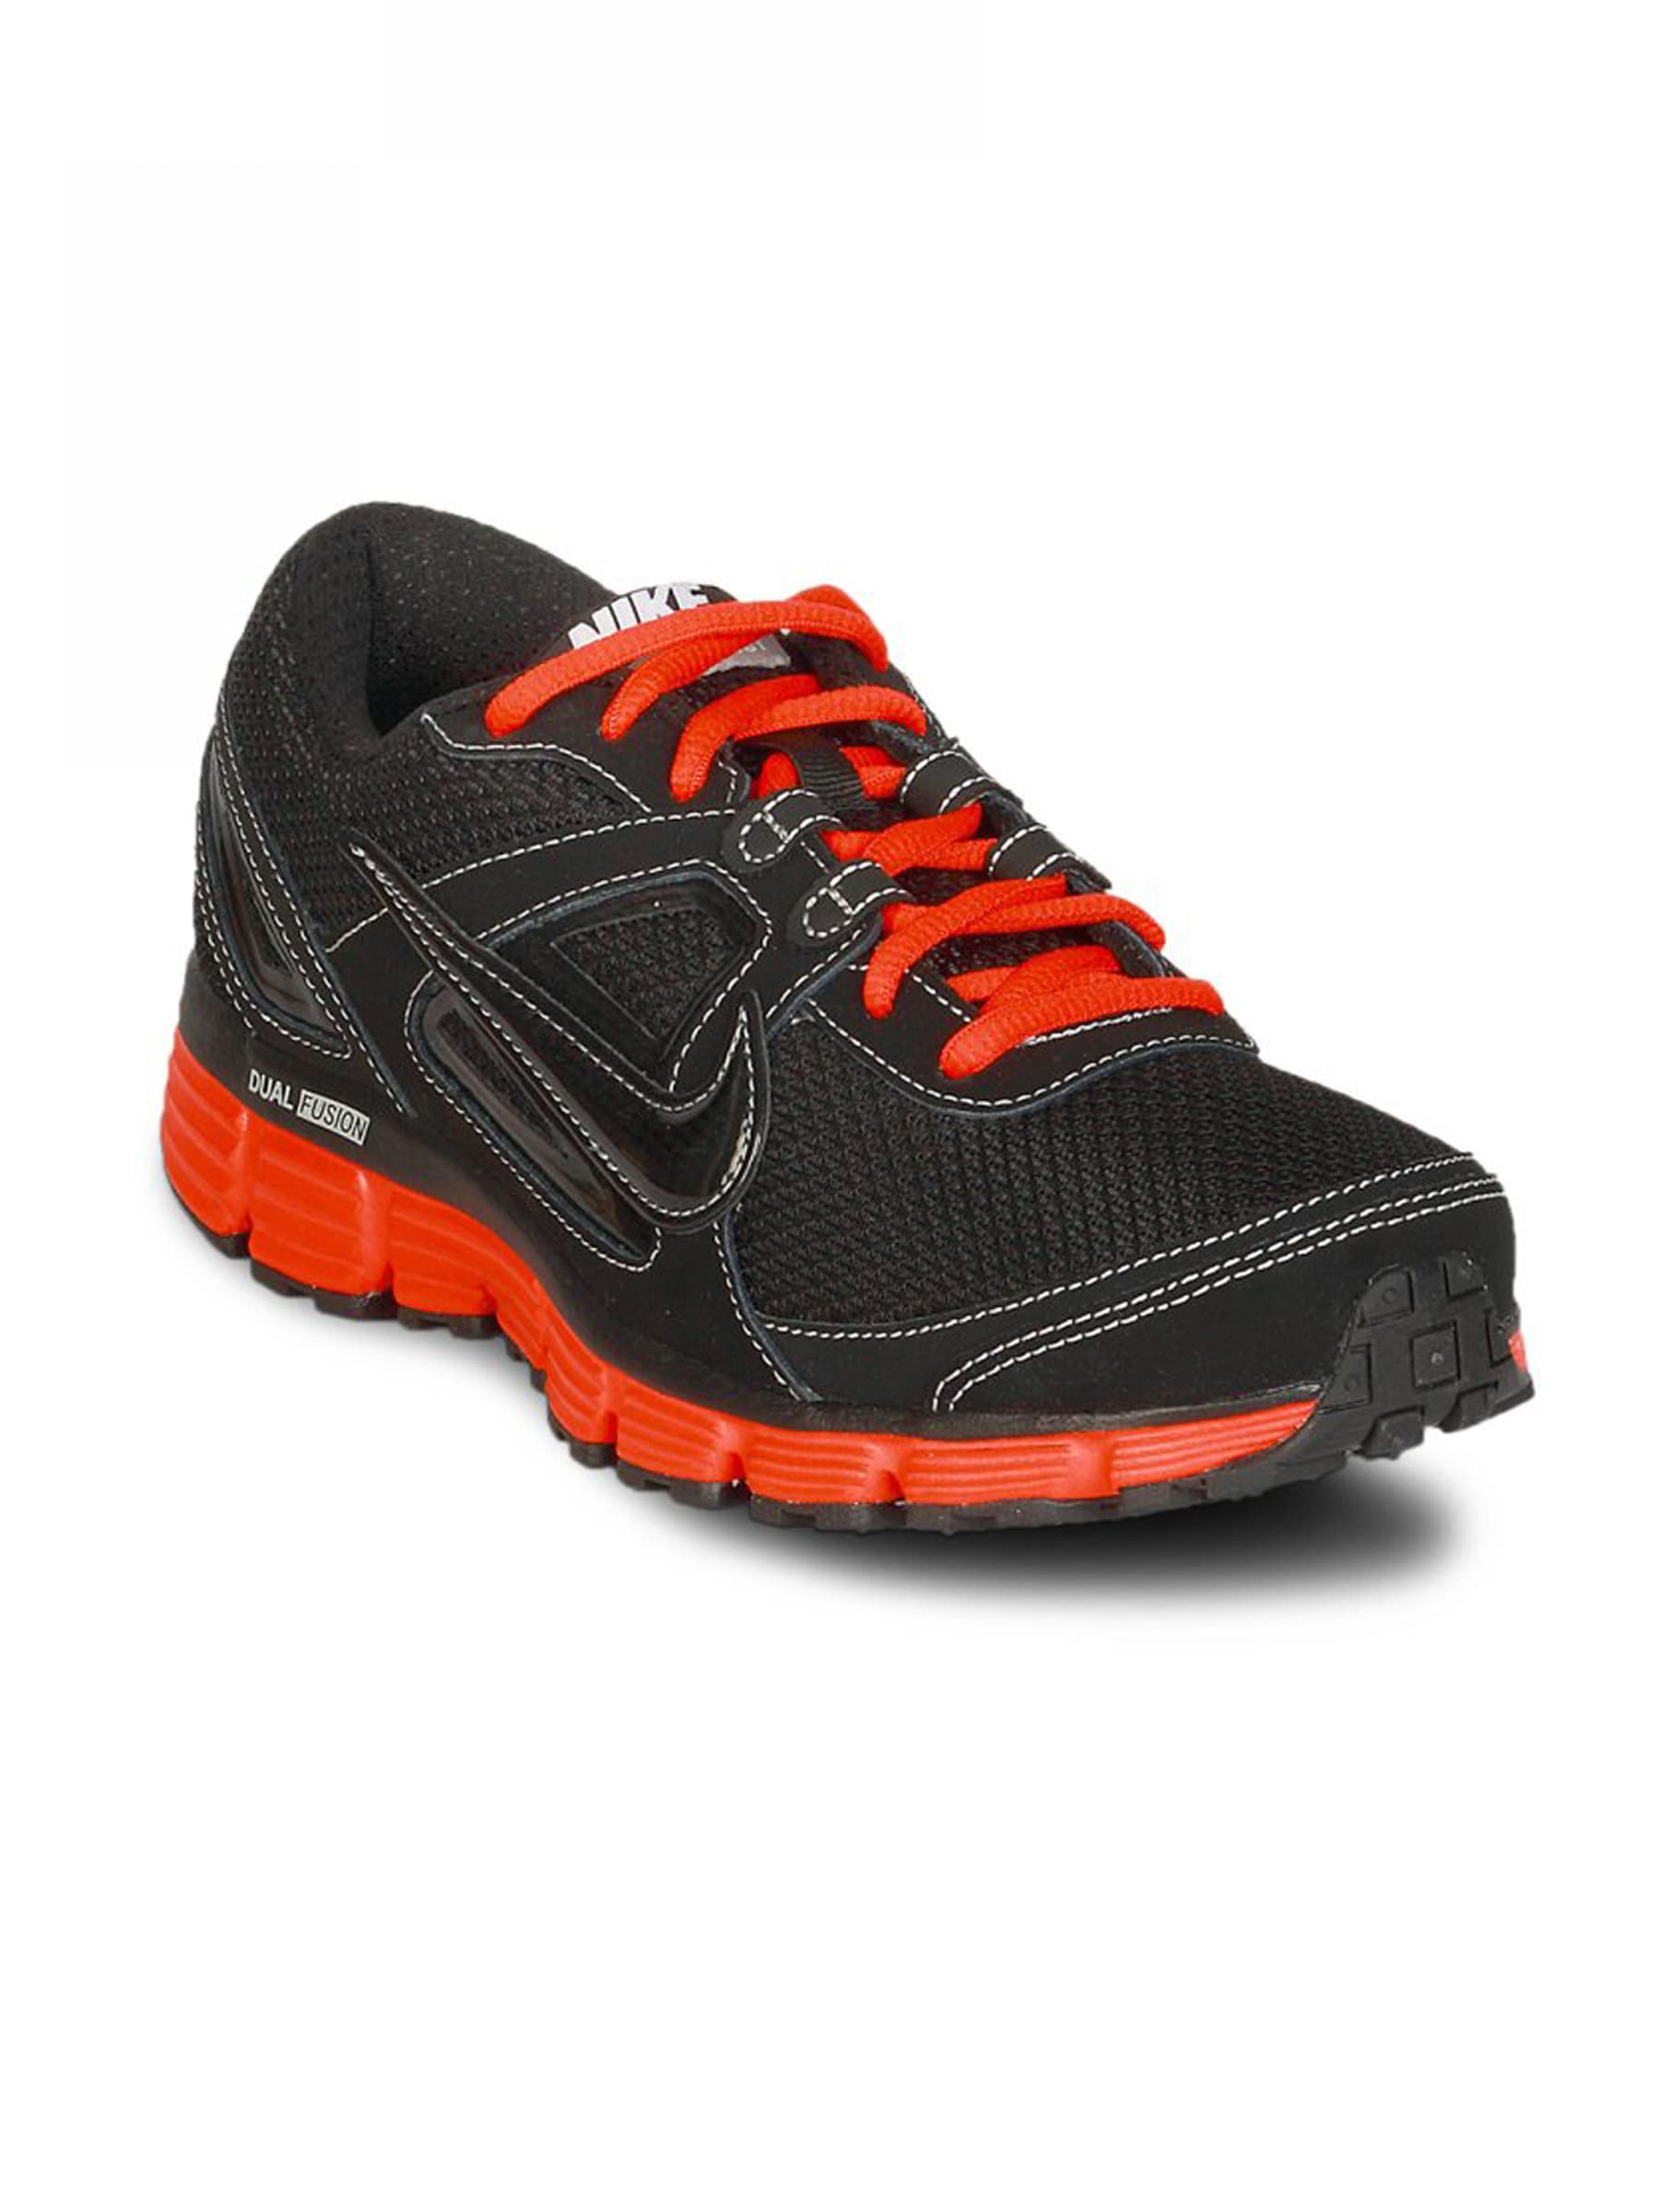 Nike Men's Dual Fusion Black Red Shoe